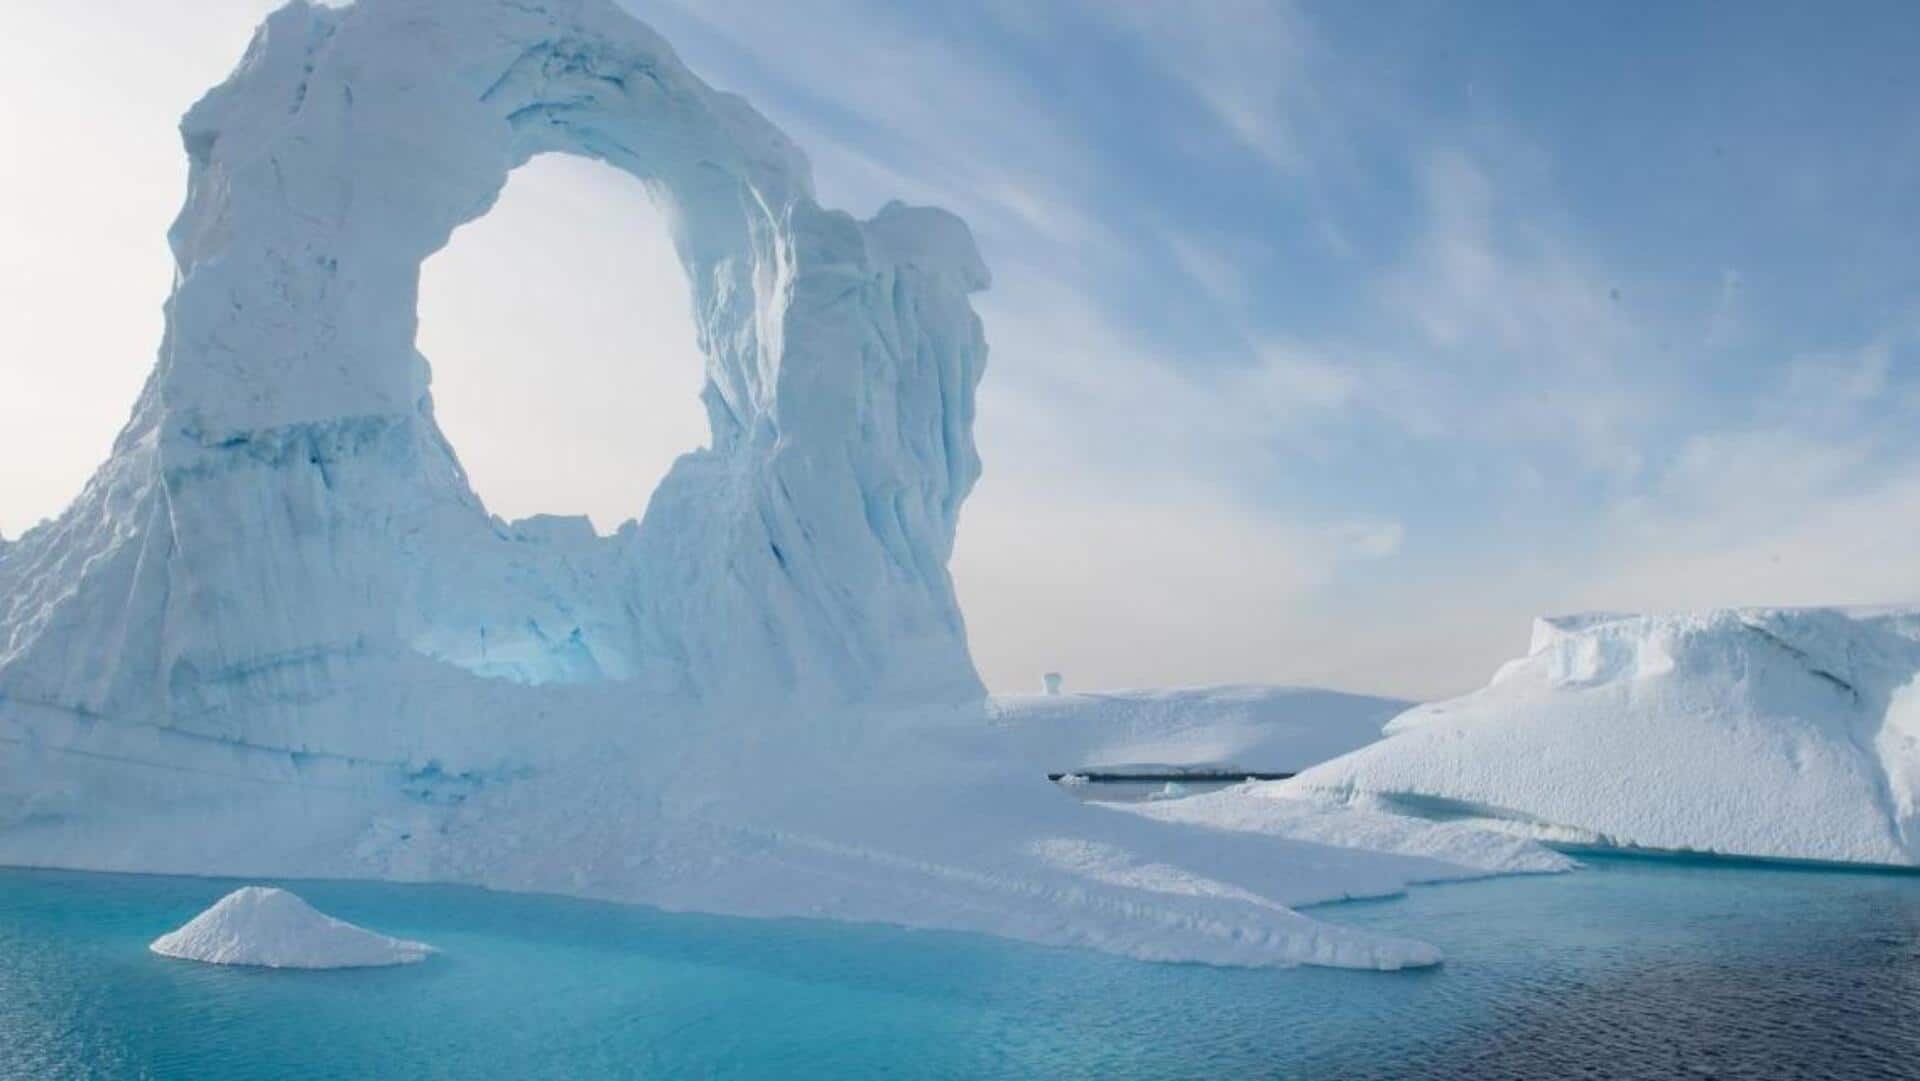 Antarctic expedition cruise: Explore vast glaciers and wilderness